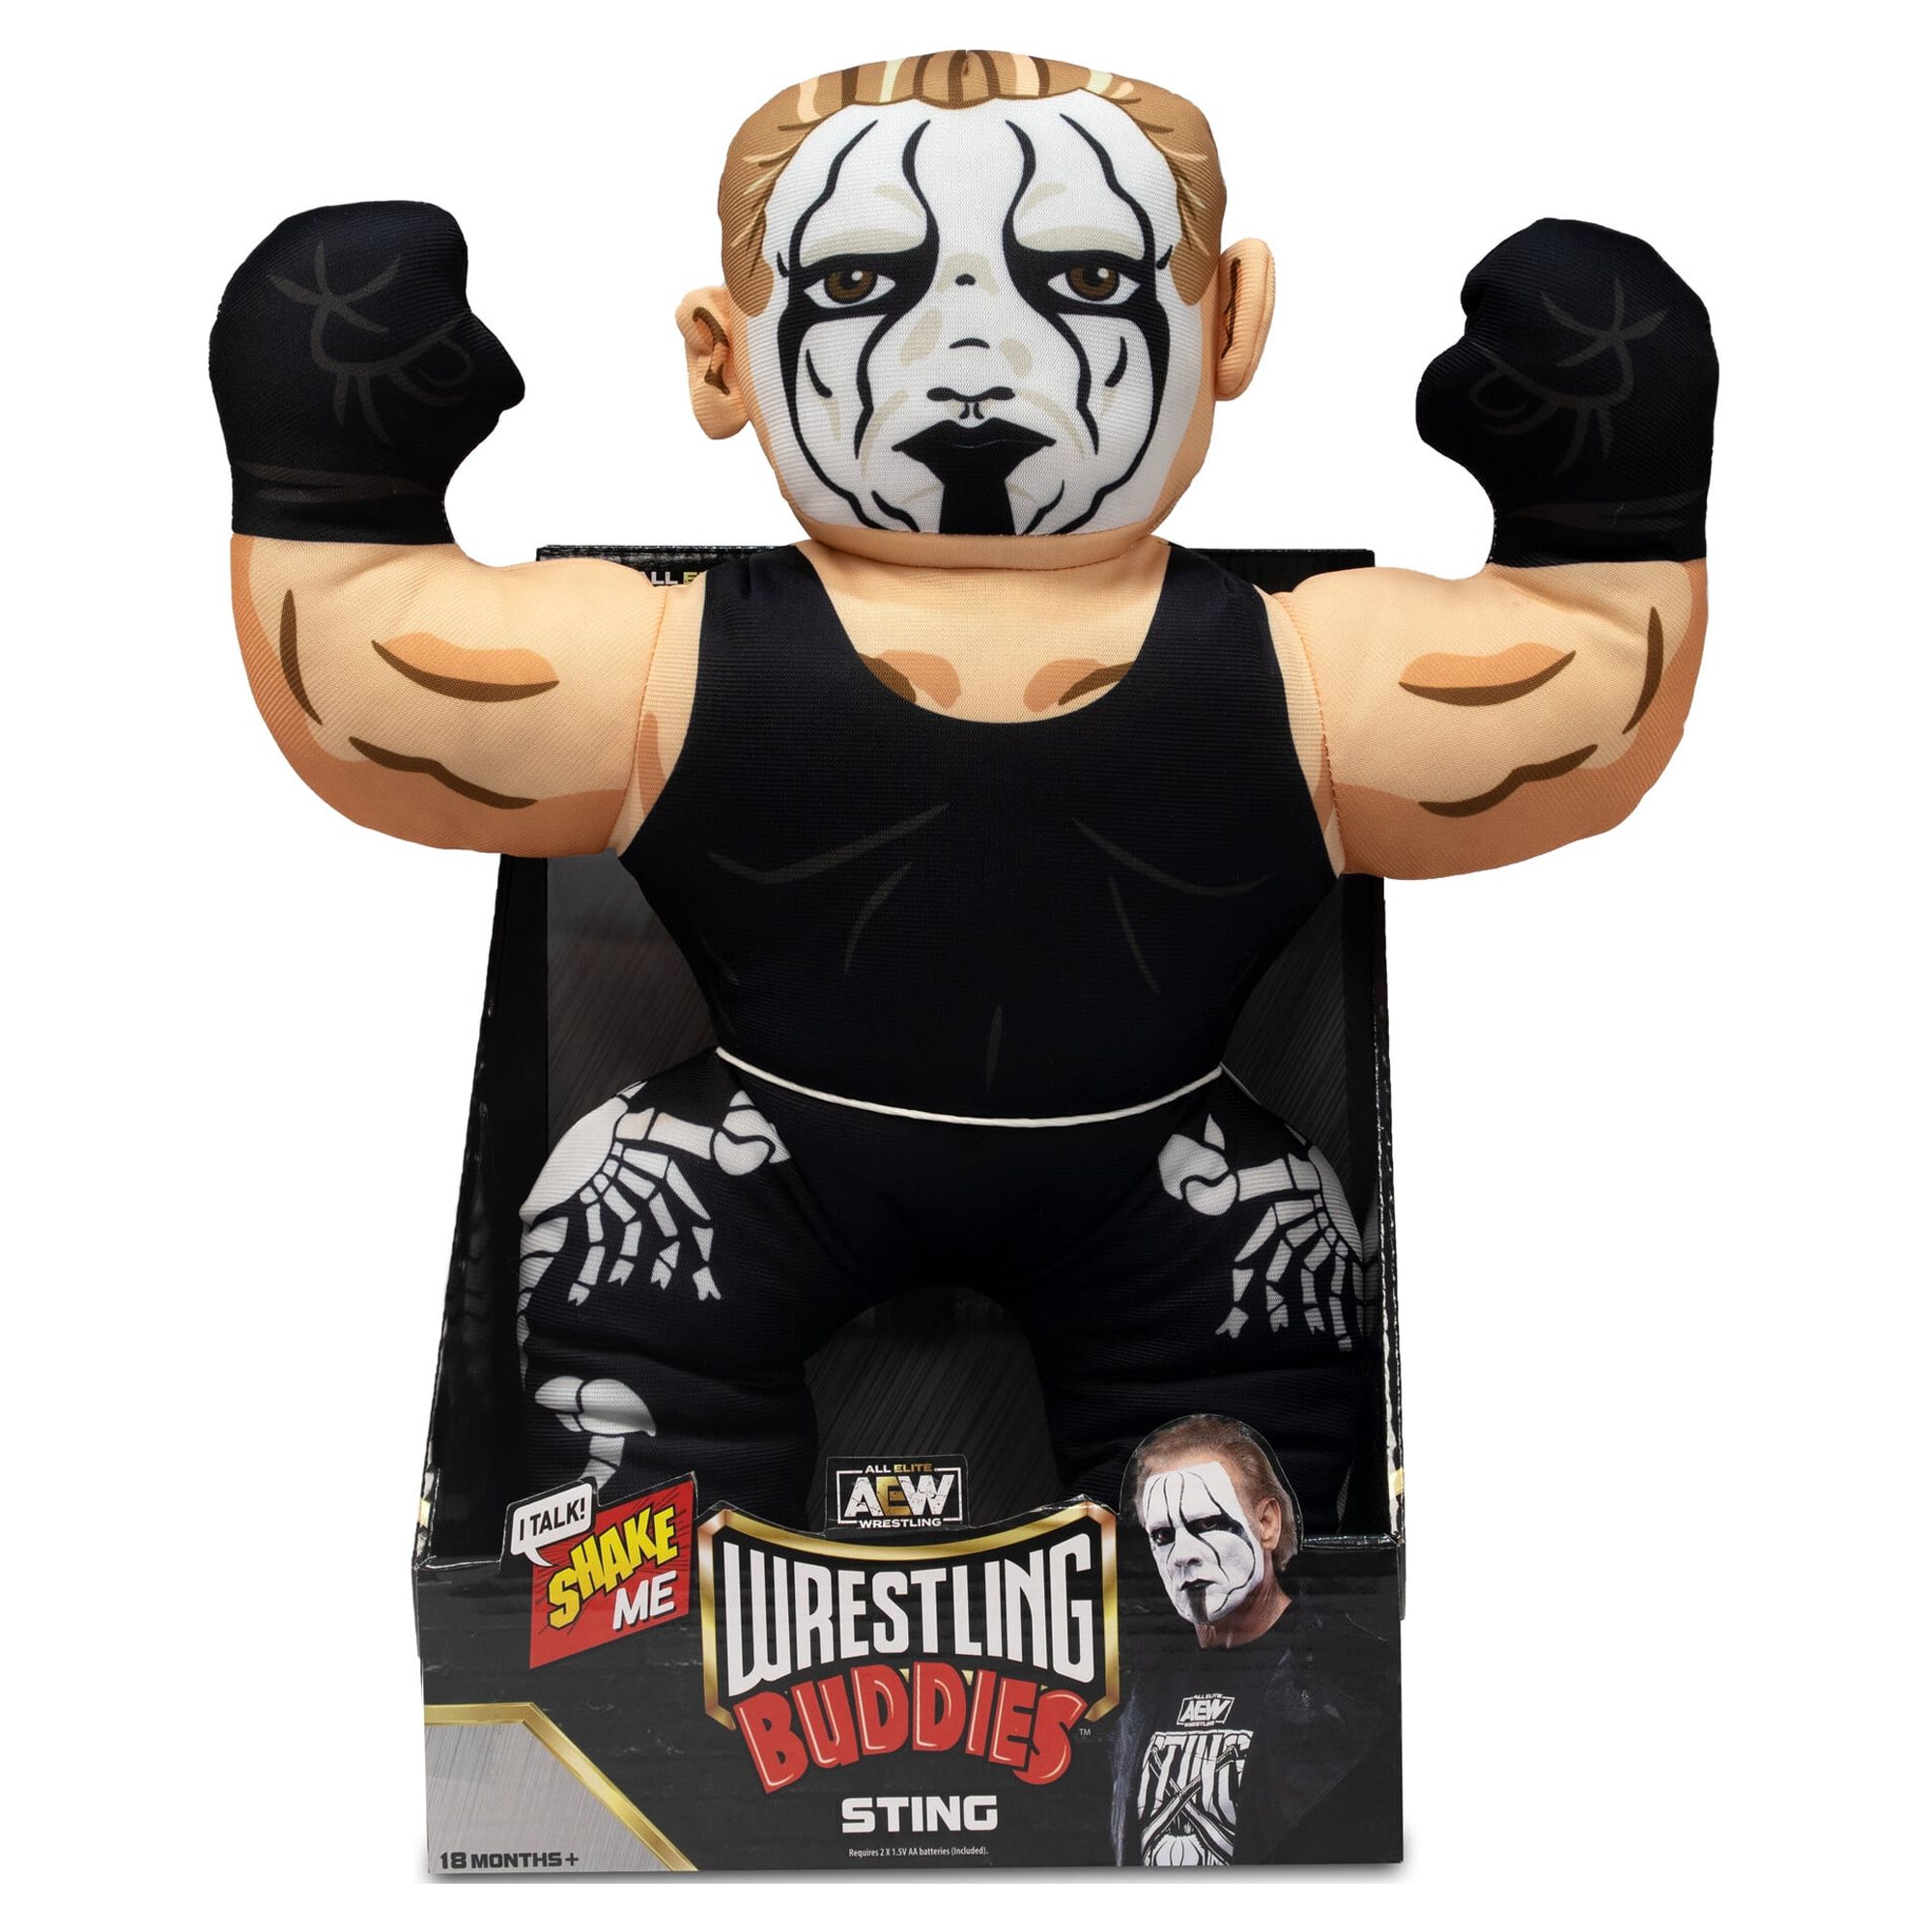 AEW Wrestling Buddies Sting 12" Role Play Plush - image 1 of 7